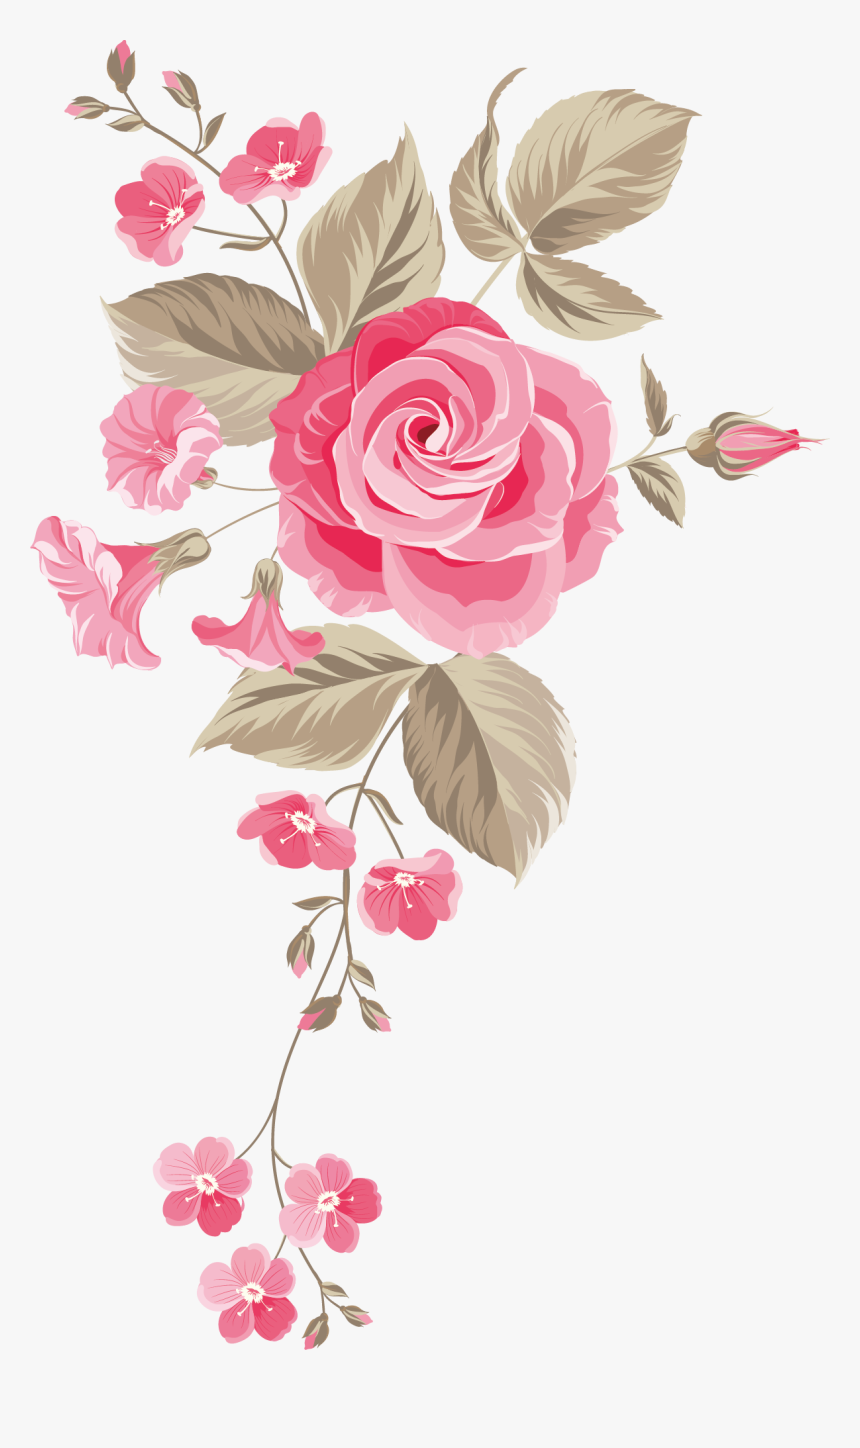 Rose Flower Png Image Free Download Searchpng - Transparent Background Pink Roses